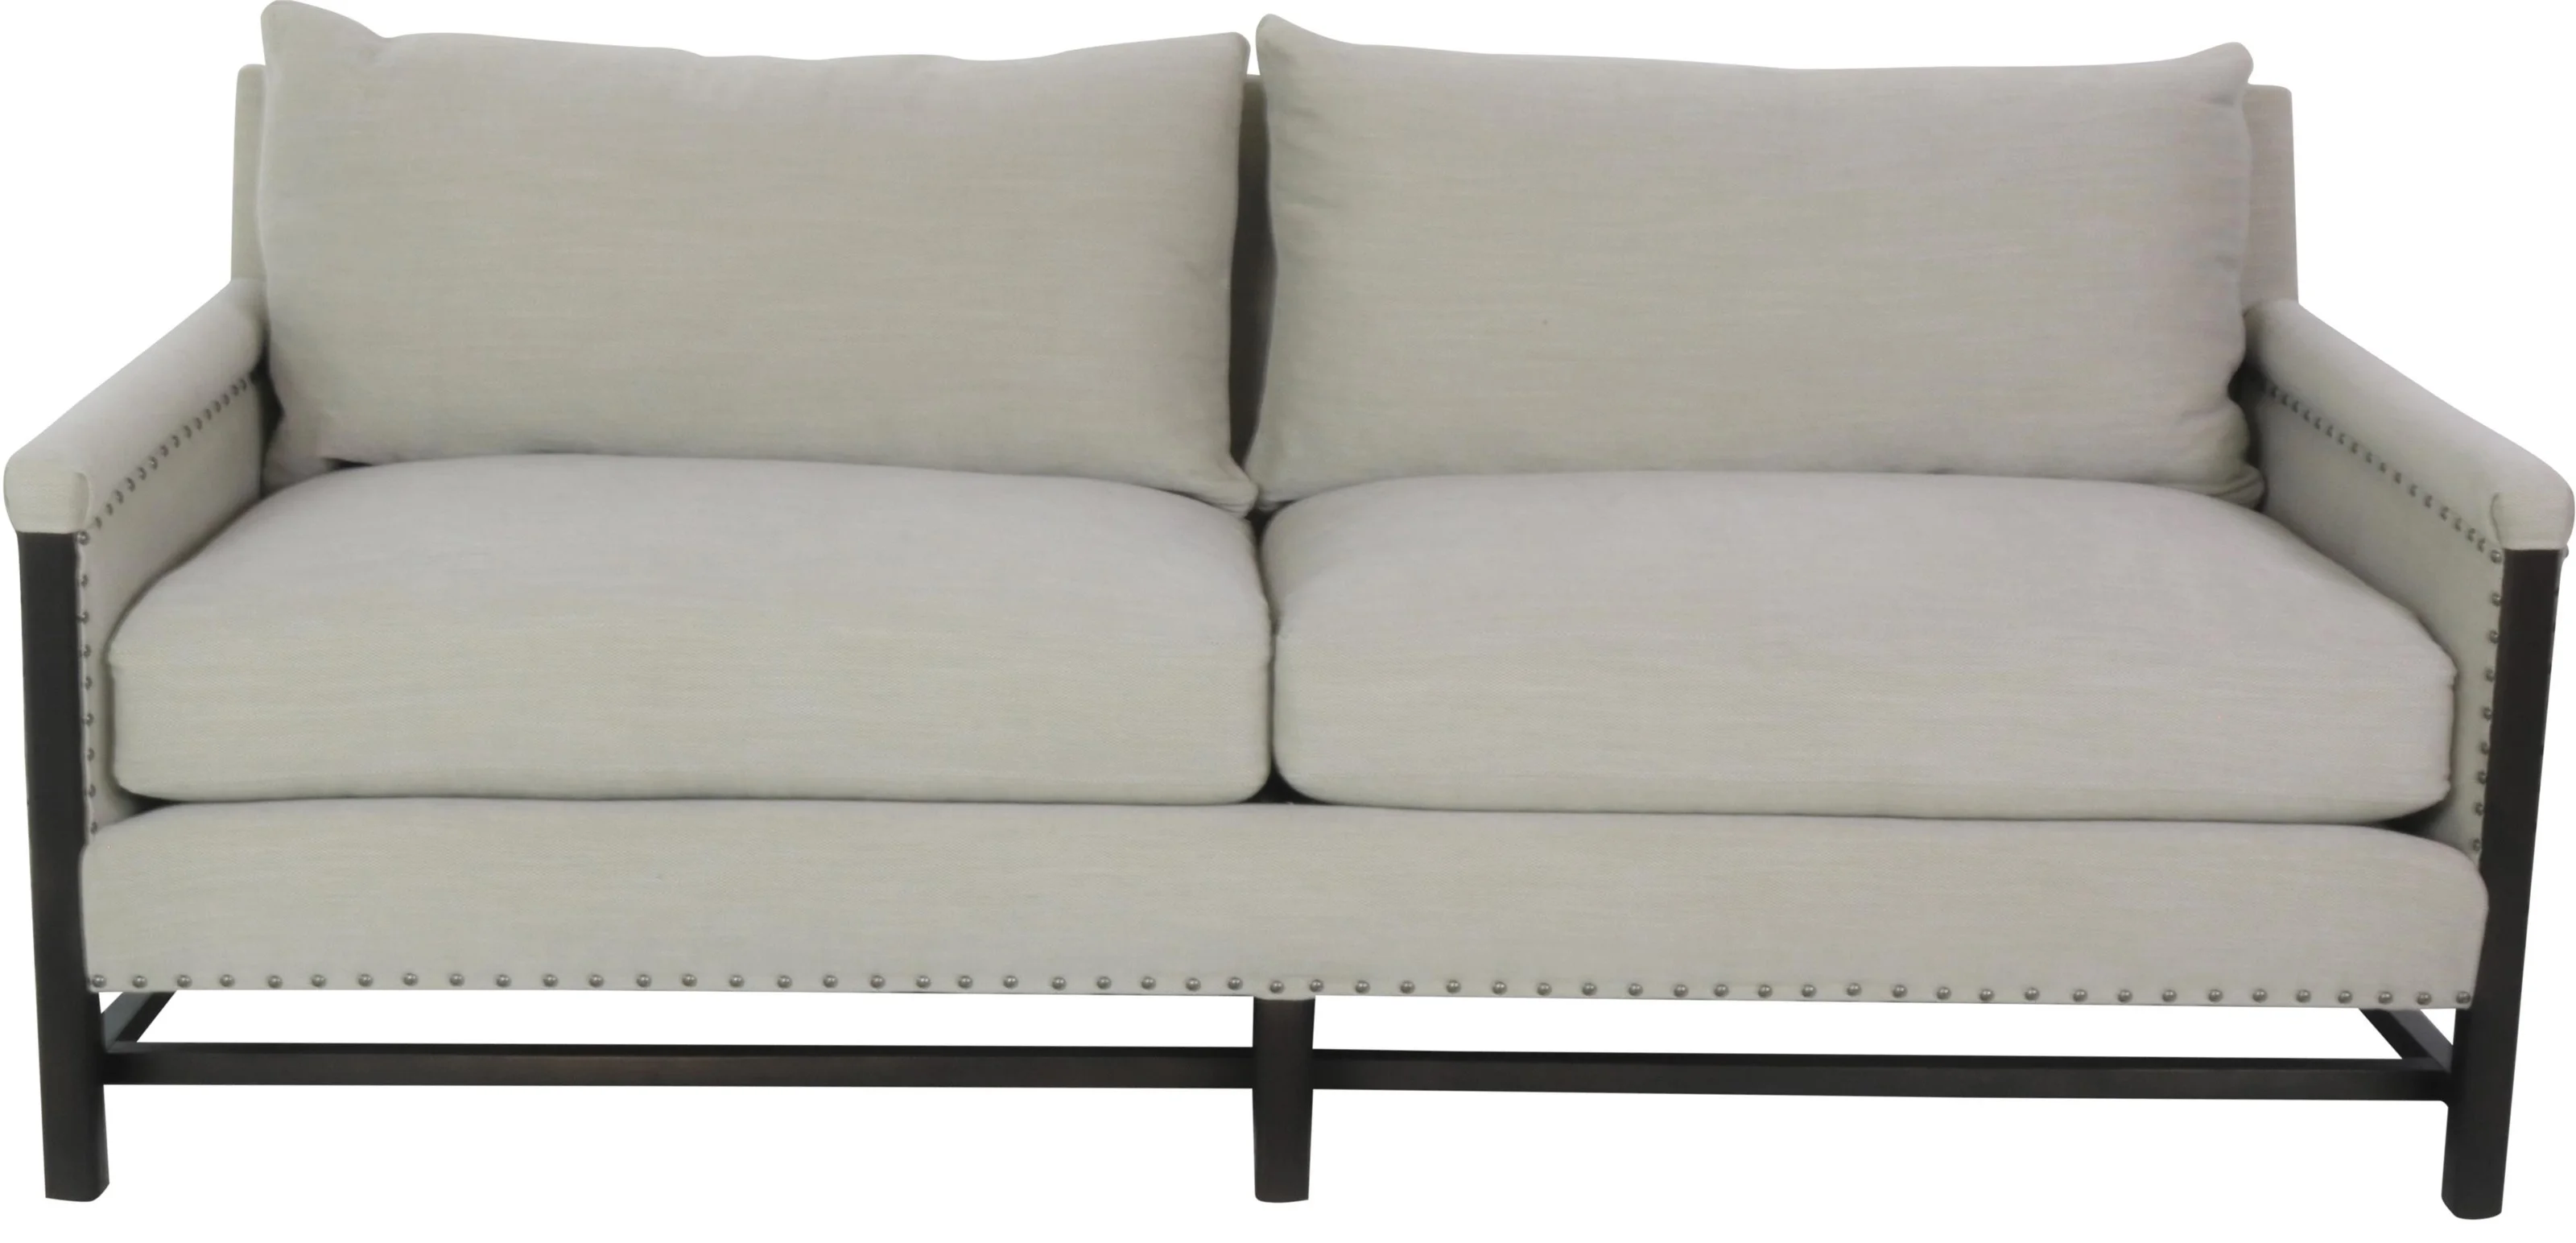 Lee Industries Apartment Sofa | Sprintz Furniture | Sofas